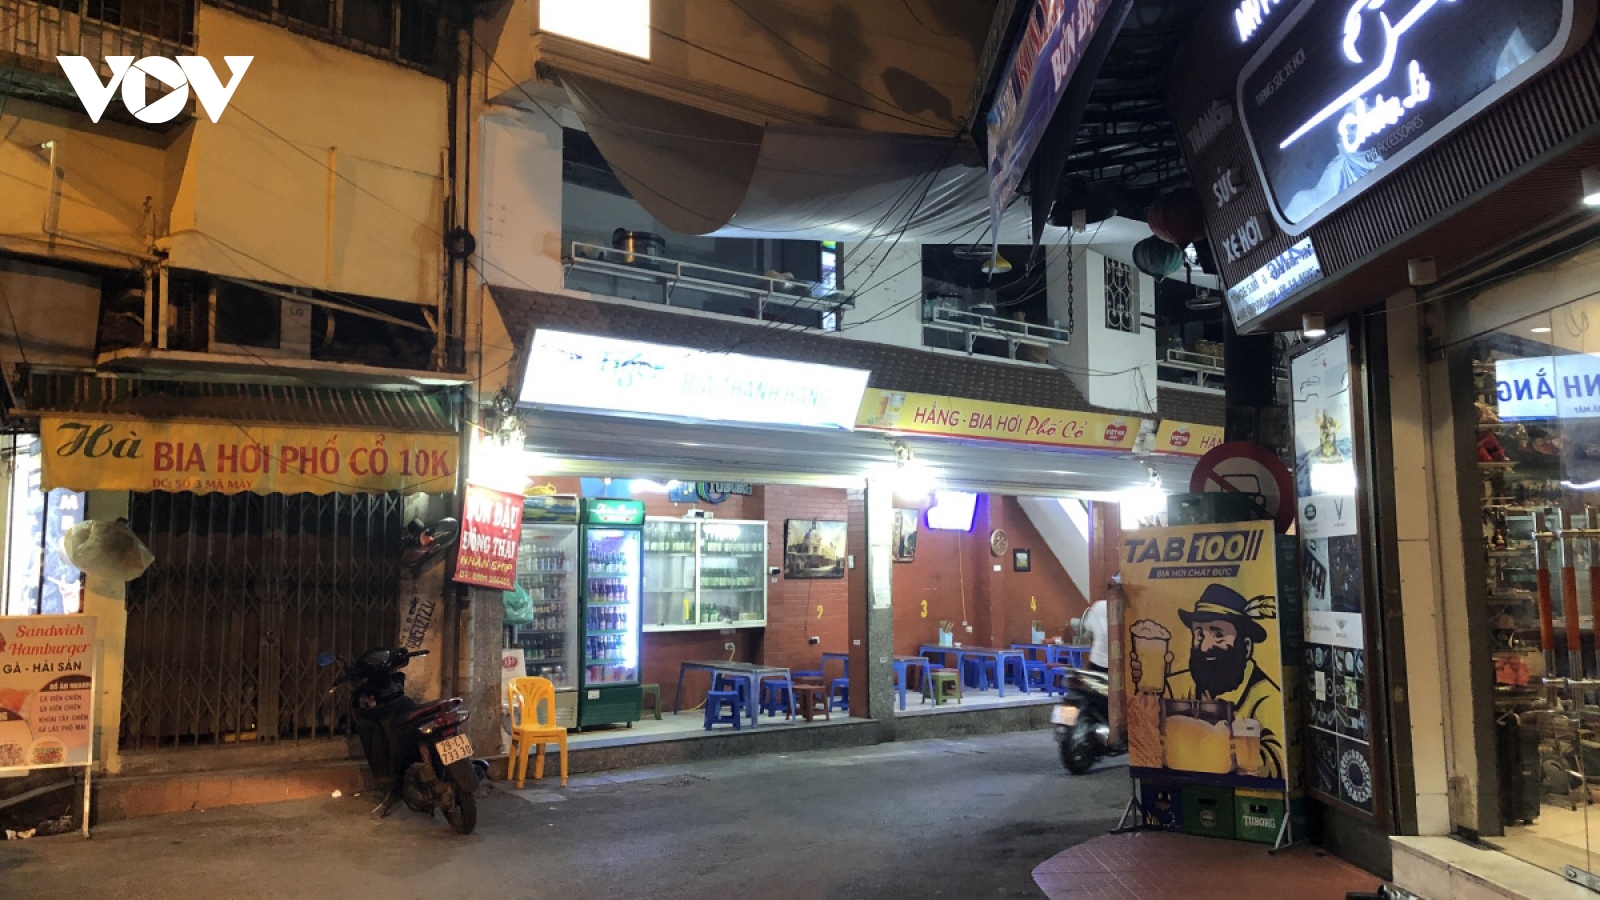 Hanoi food outlets left deserted amid COVID-19 fears